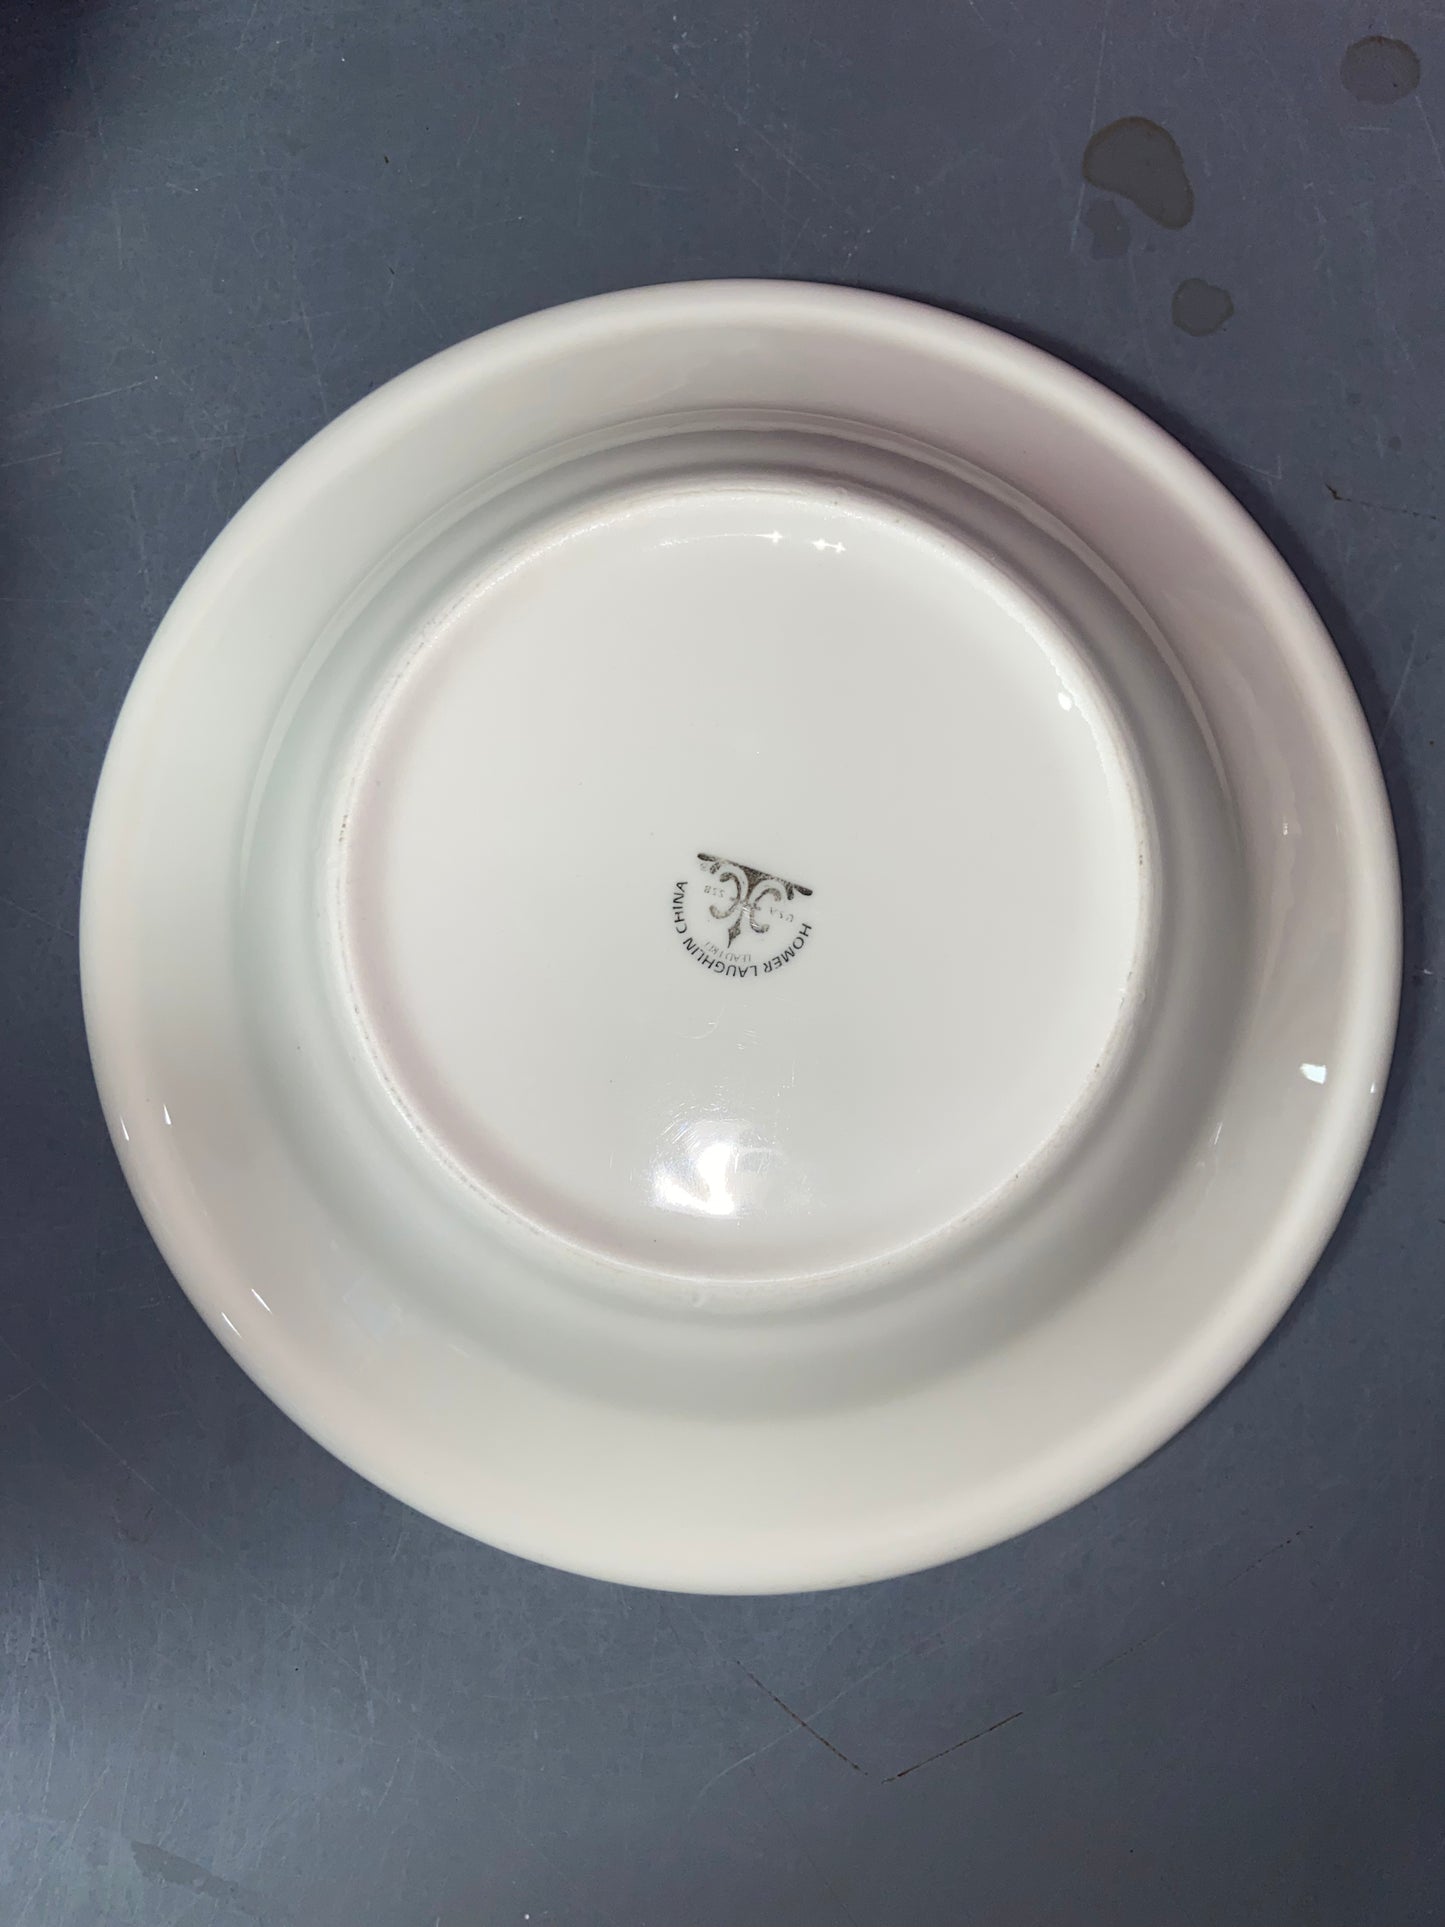 Vintage Homer Laughlin Restaurant Ware Rim Soup Bowl in “Chicago Blue Plate Special”